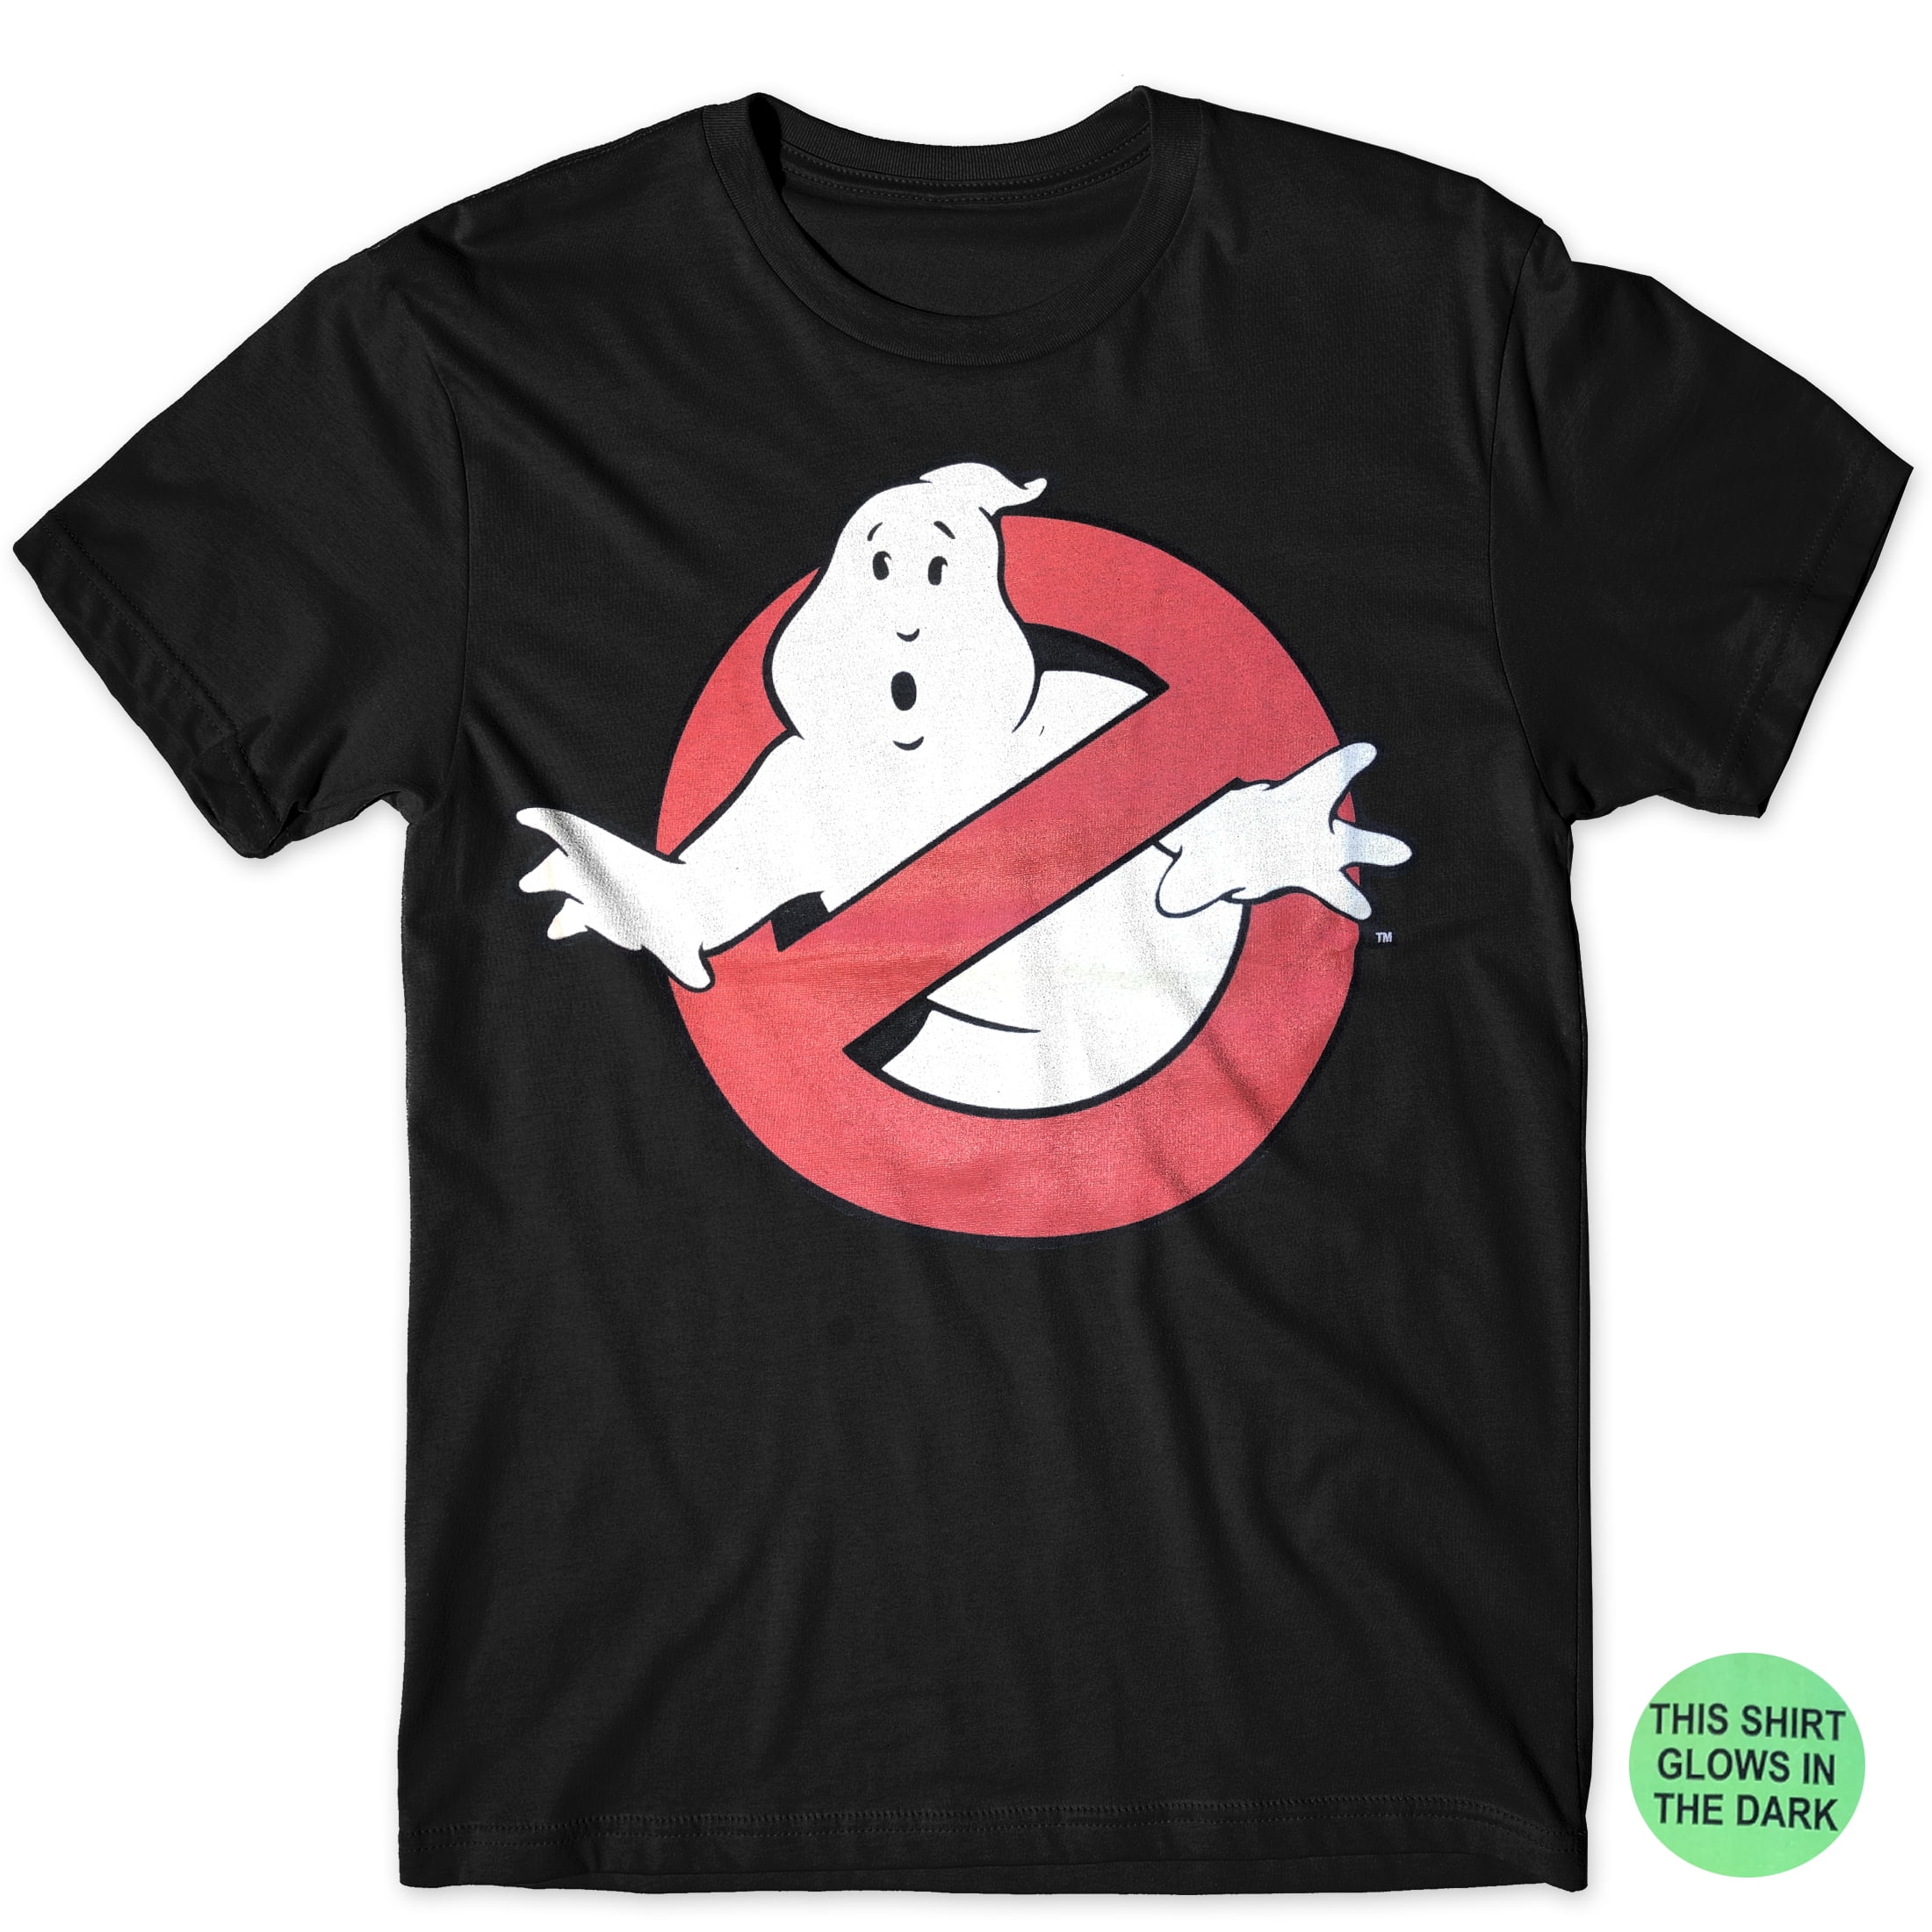 Glow in the Dark Black Ghostbusters T-shirt Large - Walmart.com